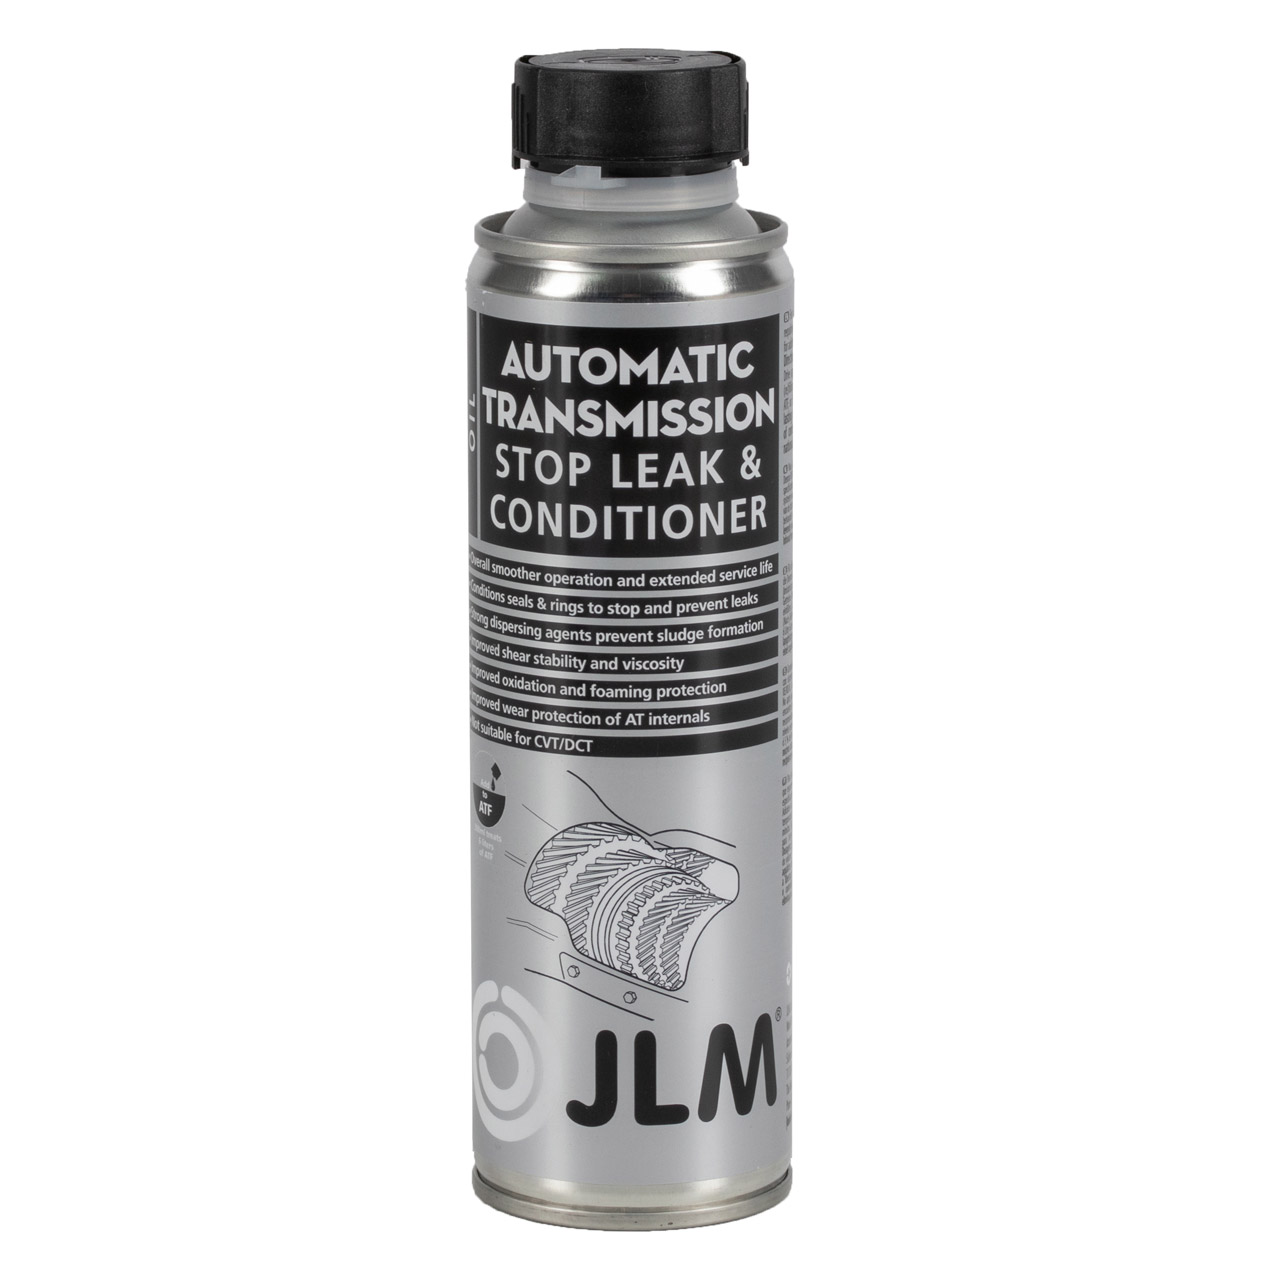 JLM Automatic Transmission Stop Leak & Conditioner Getriebe Abdichter Leck-Stop 250ml